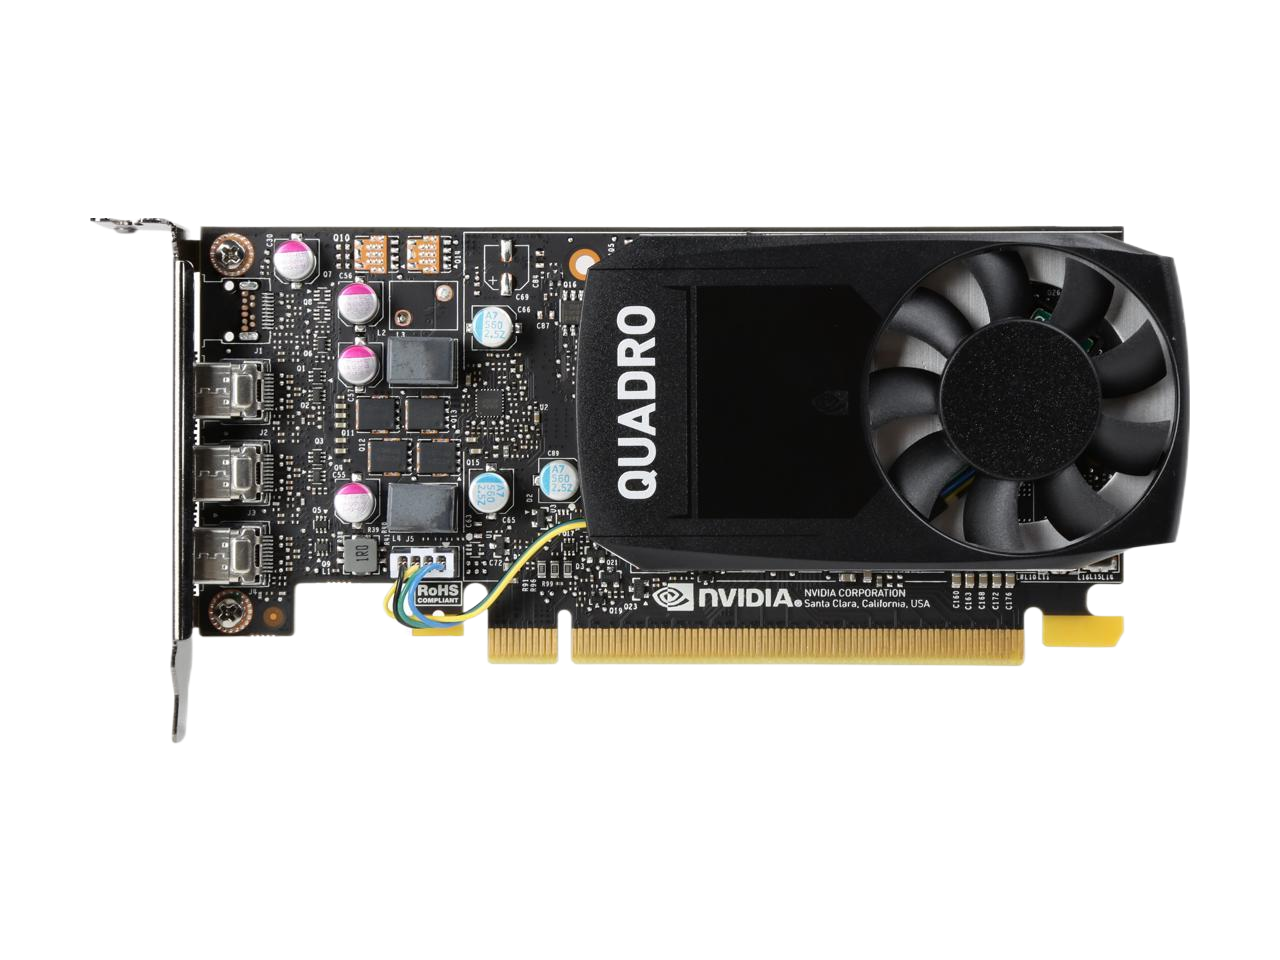 NVIDIA Quadro P400 2GB GDDR5 PCIe Graphics Card VCQP400-PB